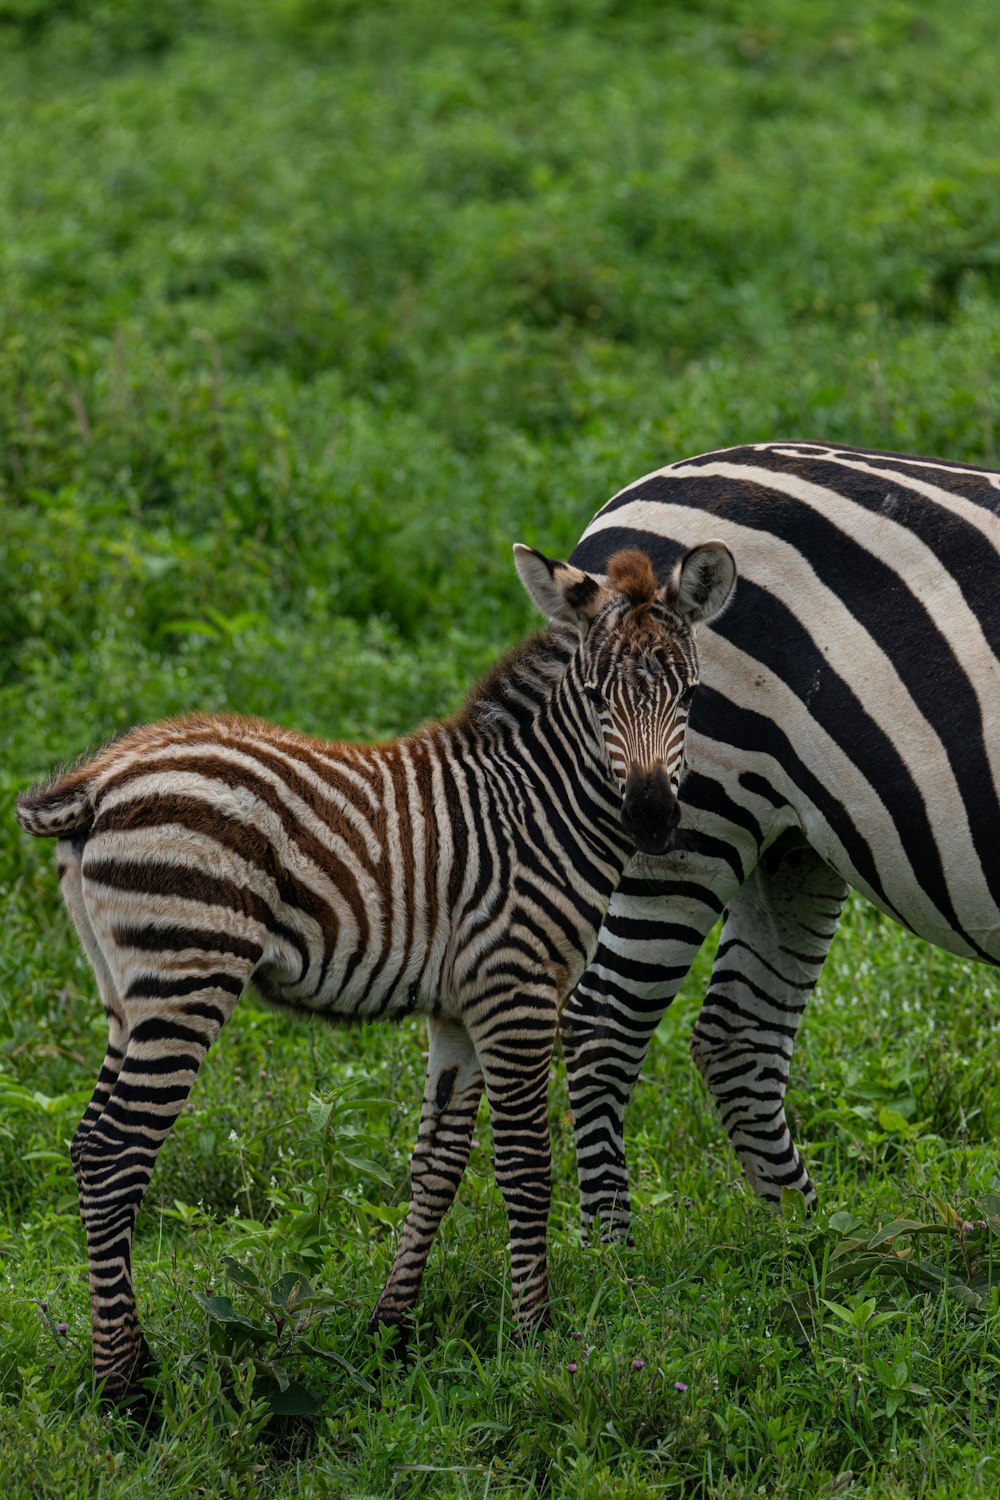 a baby zebra standing next to an adult zebra